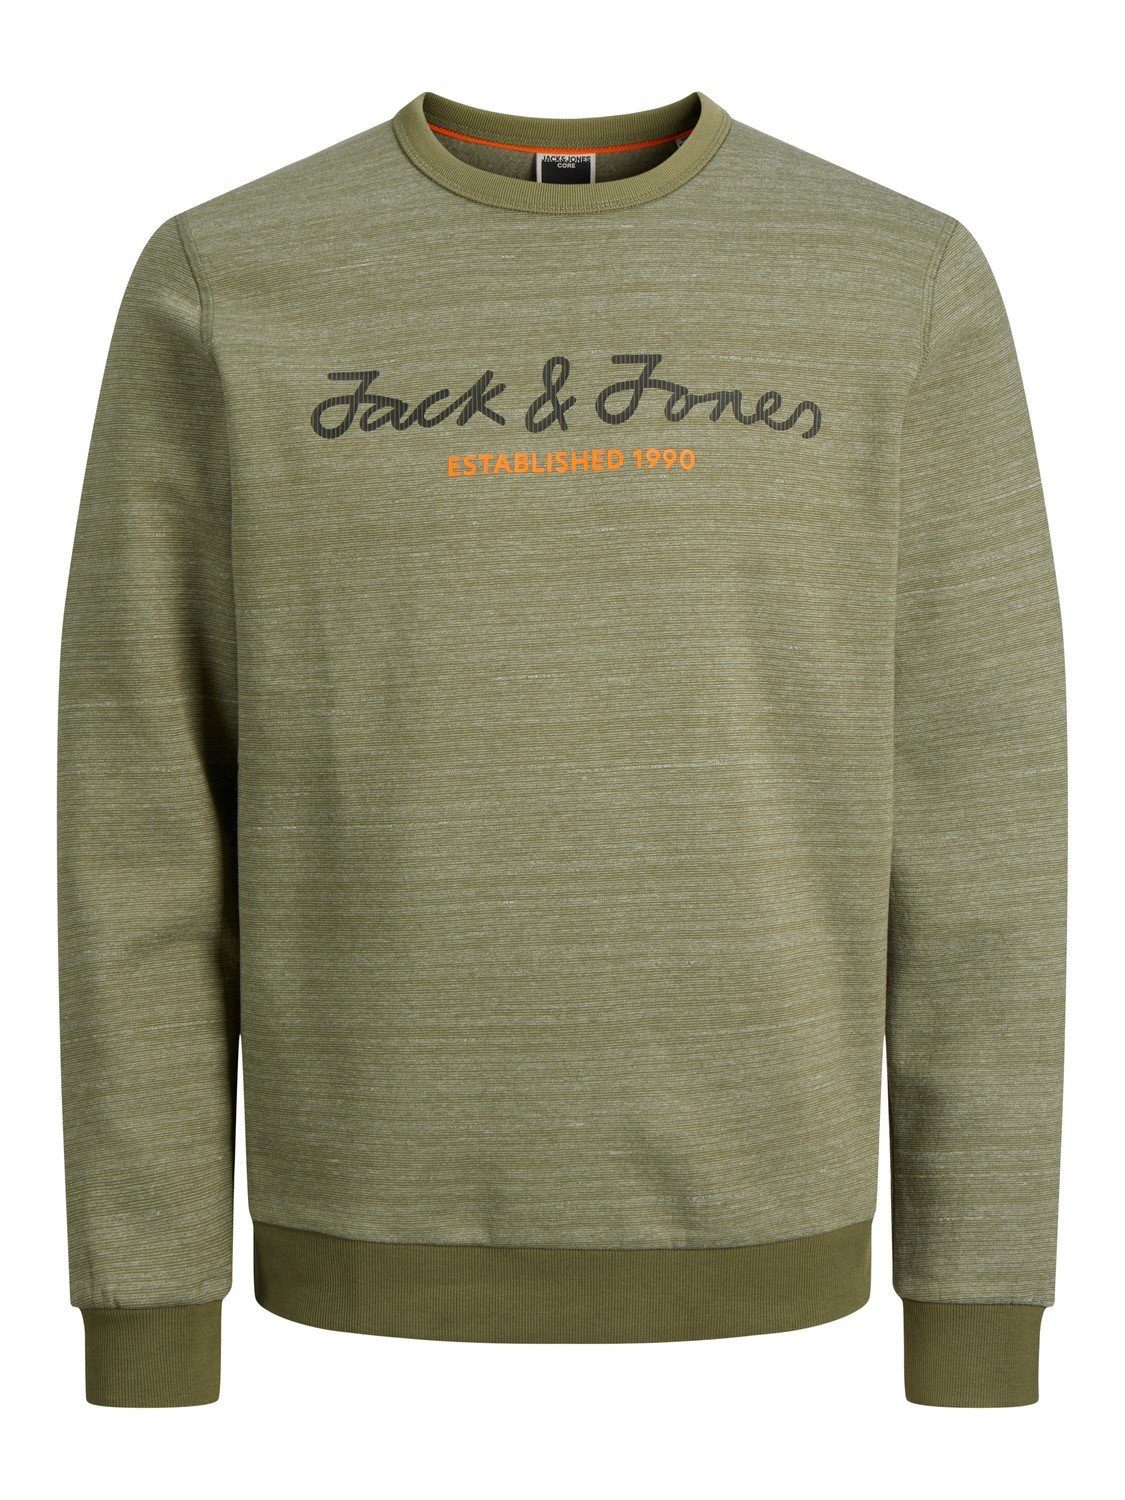 innen & Schnitt SWEAT Sweatshirt Logodruck, Jones angeraut, Jack normaler CREW JCOBERG Material, weiches